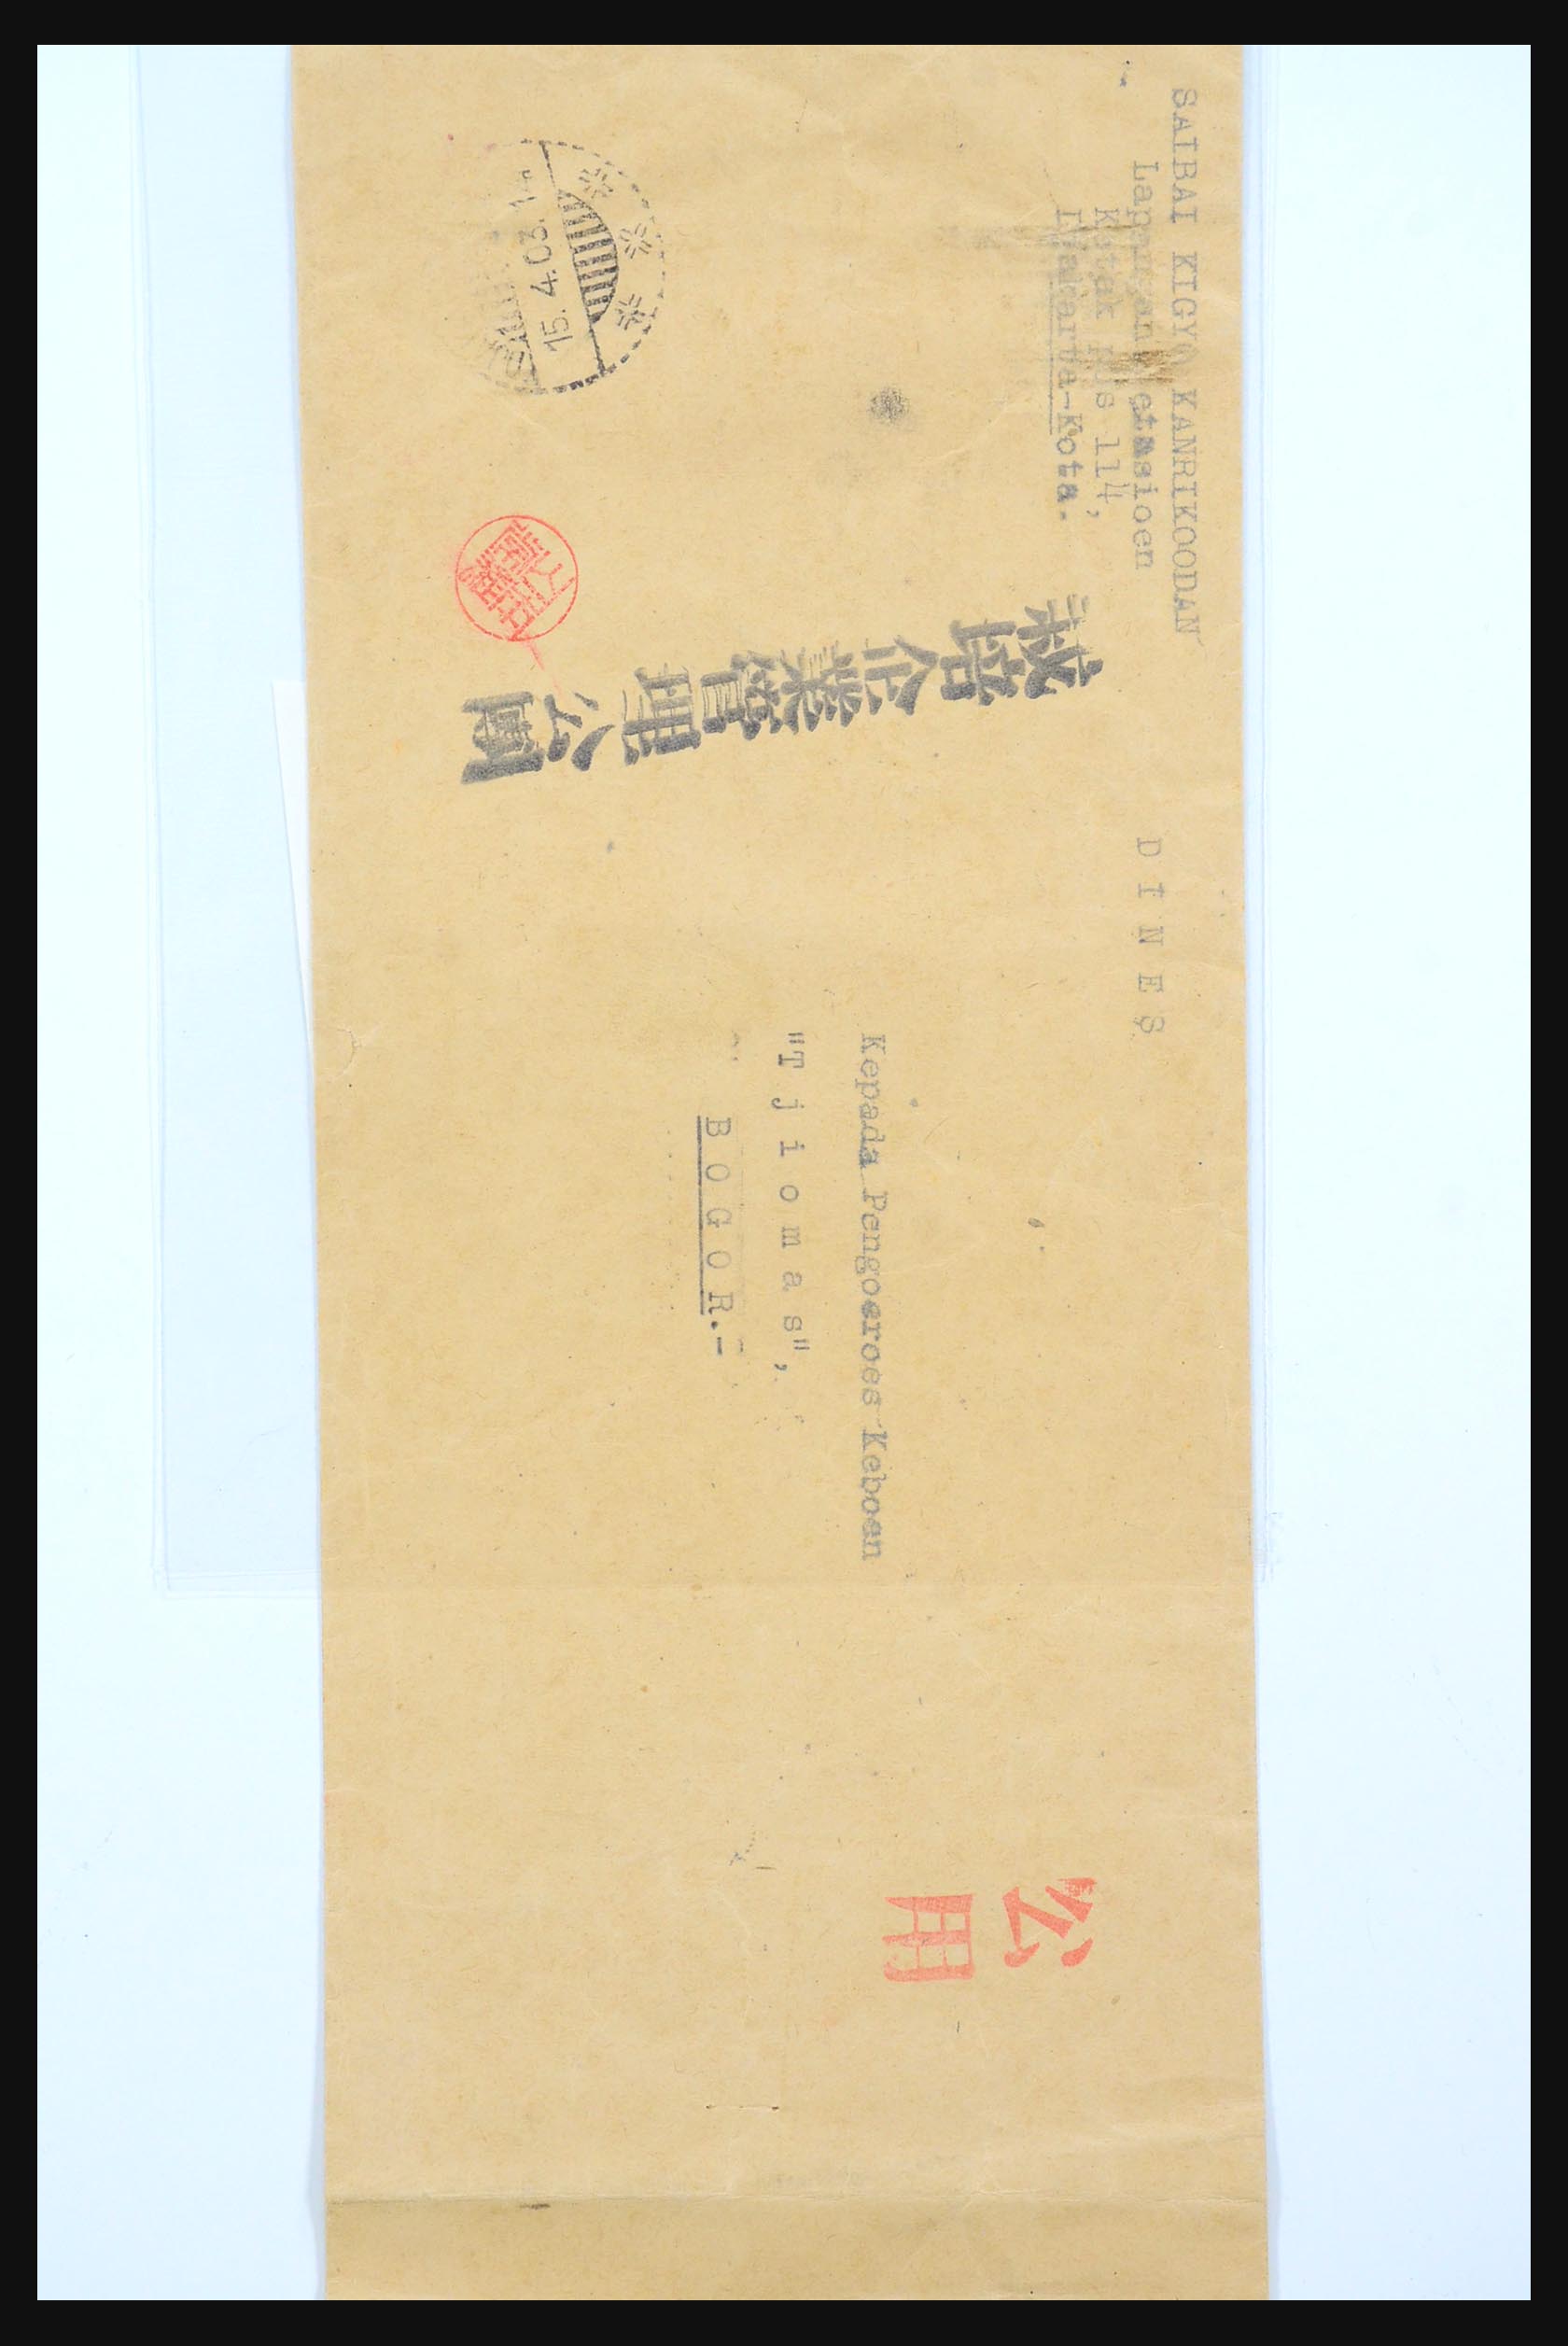 31362 064 - 31362 Nederlands Indië Japanse bezetting brieven 1942-1945.